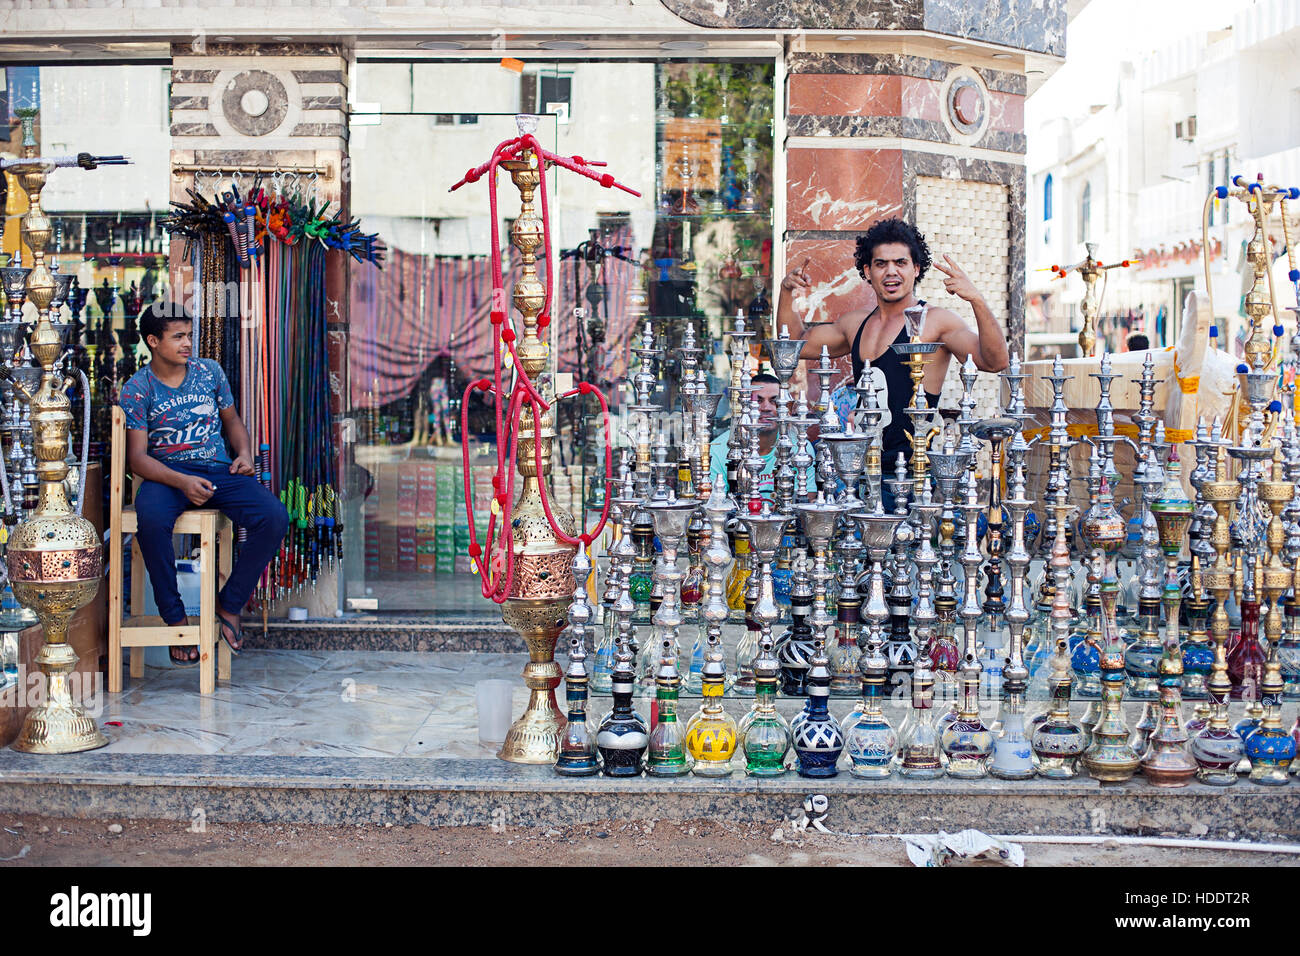 Egypt Sharm el sheikh - august 2016: hookah shop bazaar sell with friendly dealer, friendliness gestures Stock Photo